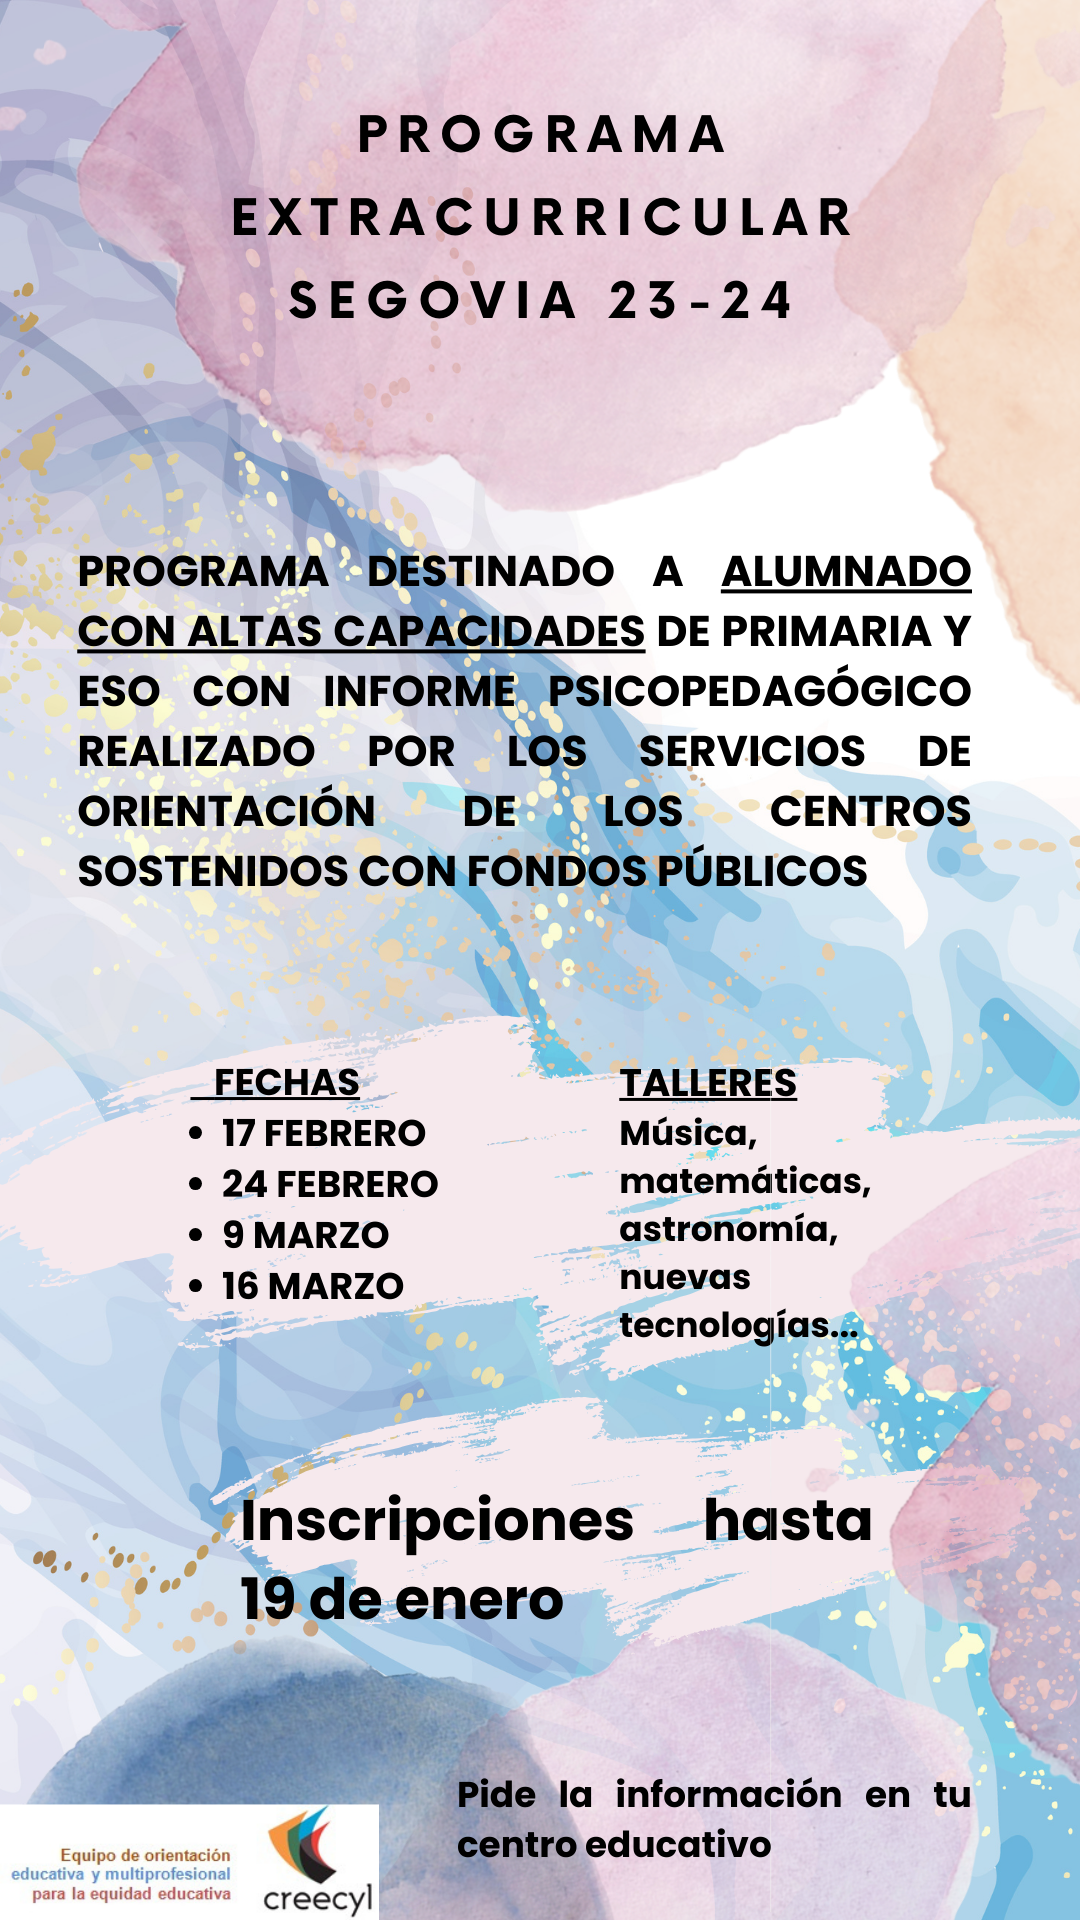 Talleres familias Segovia Programa Extracurricular Infografia